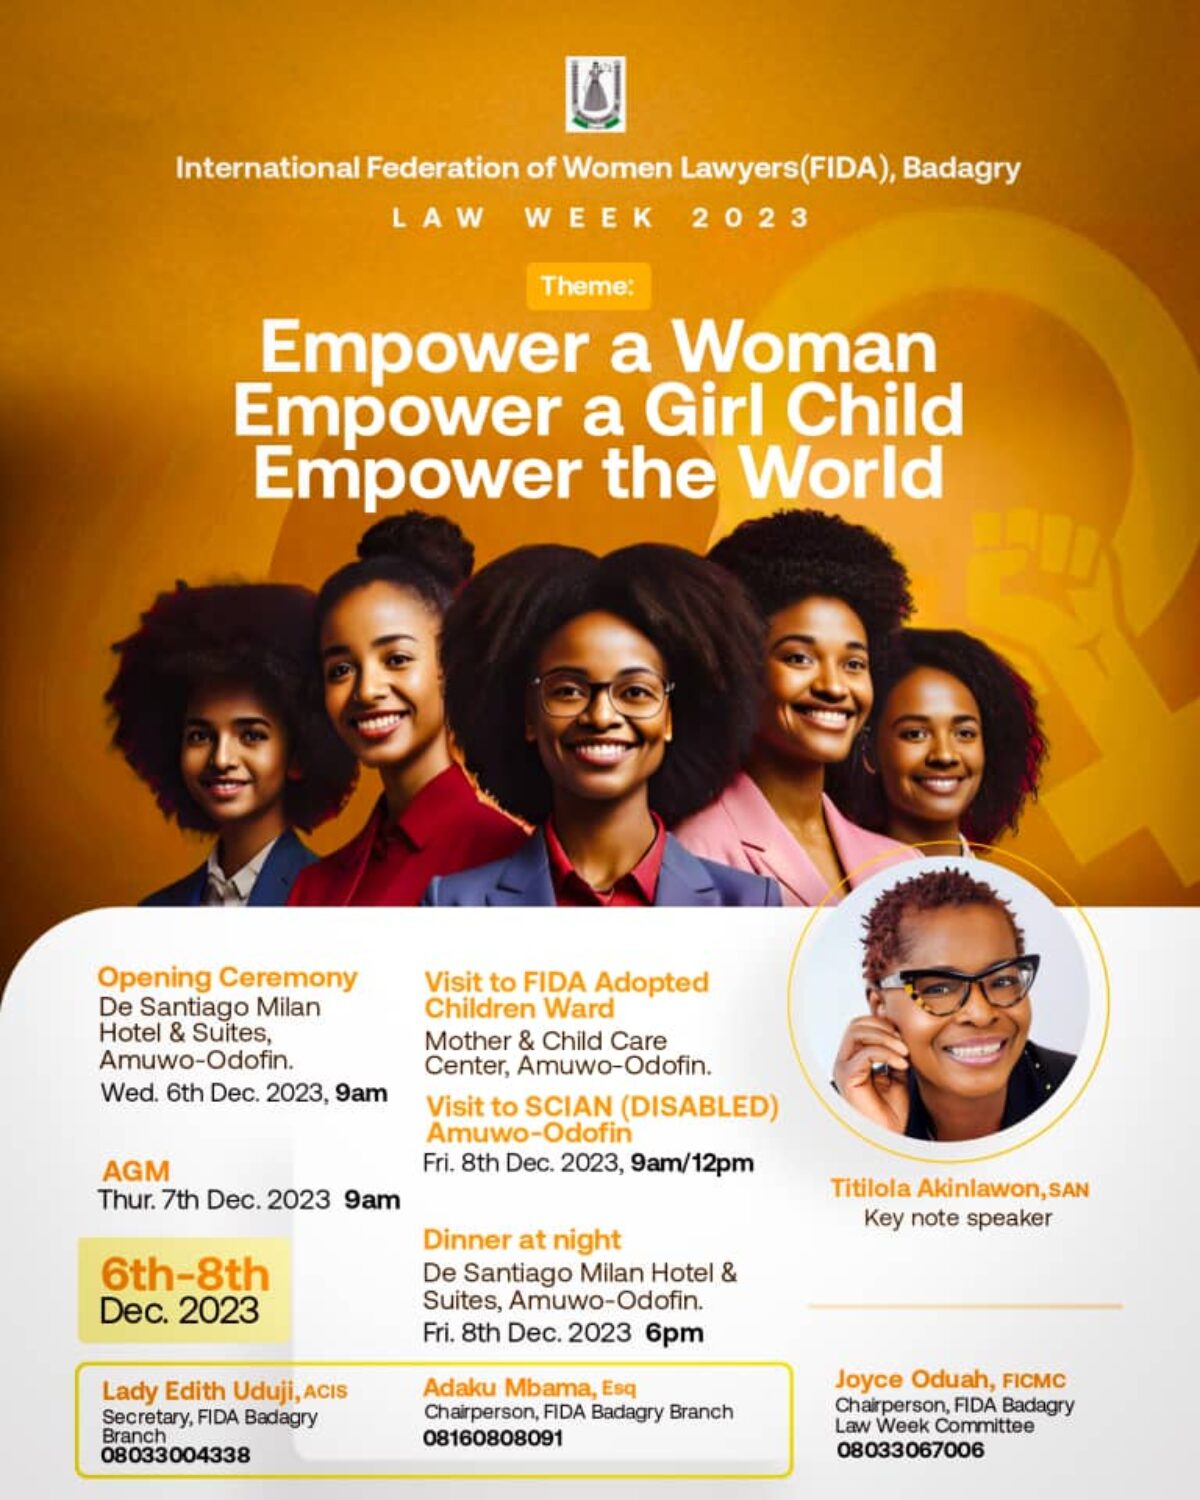 FIDA Nigeria Badagry 2023 Annual Law Week: Empowering Women and Girls, Transforming the World